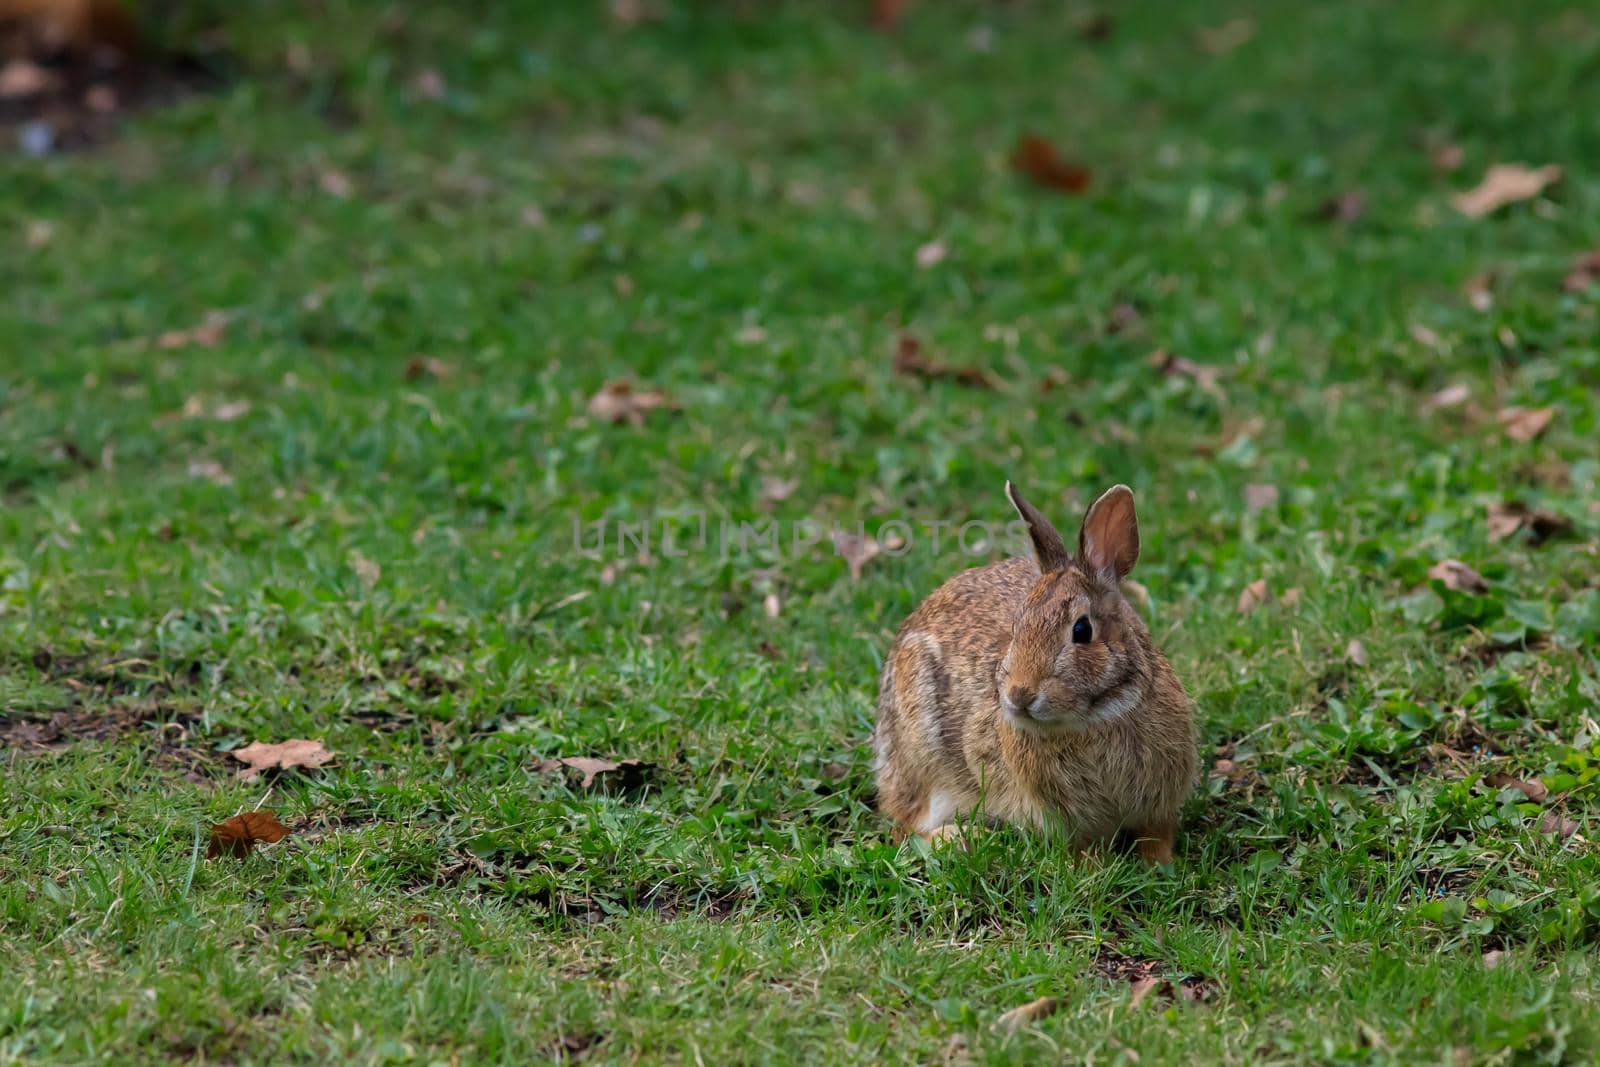 A backyard bunny rabbit by colintemple